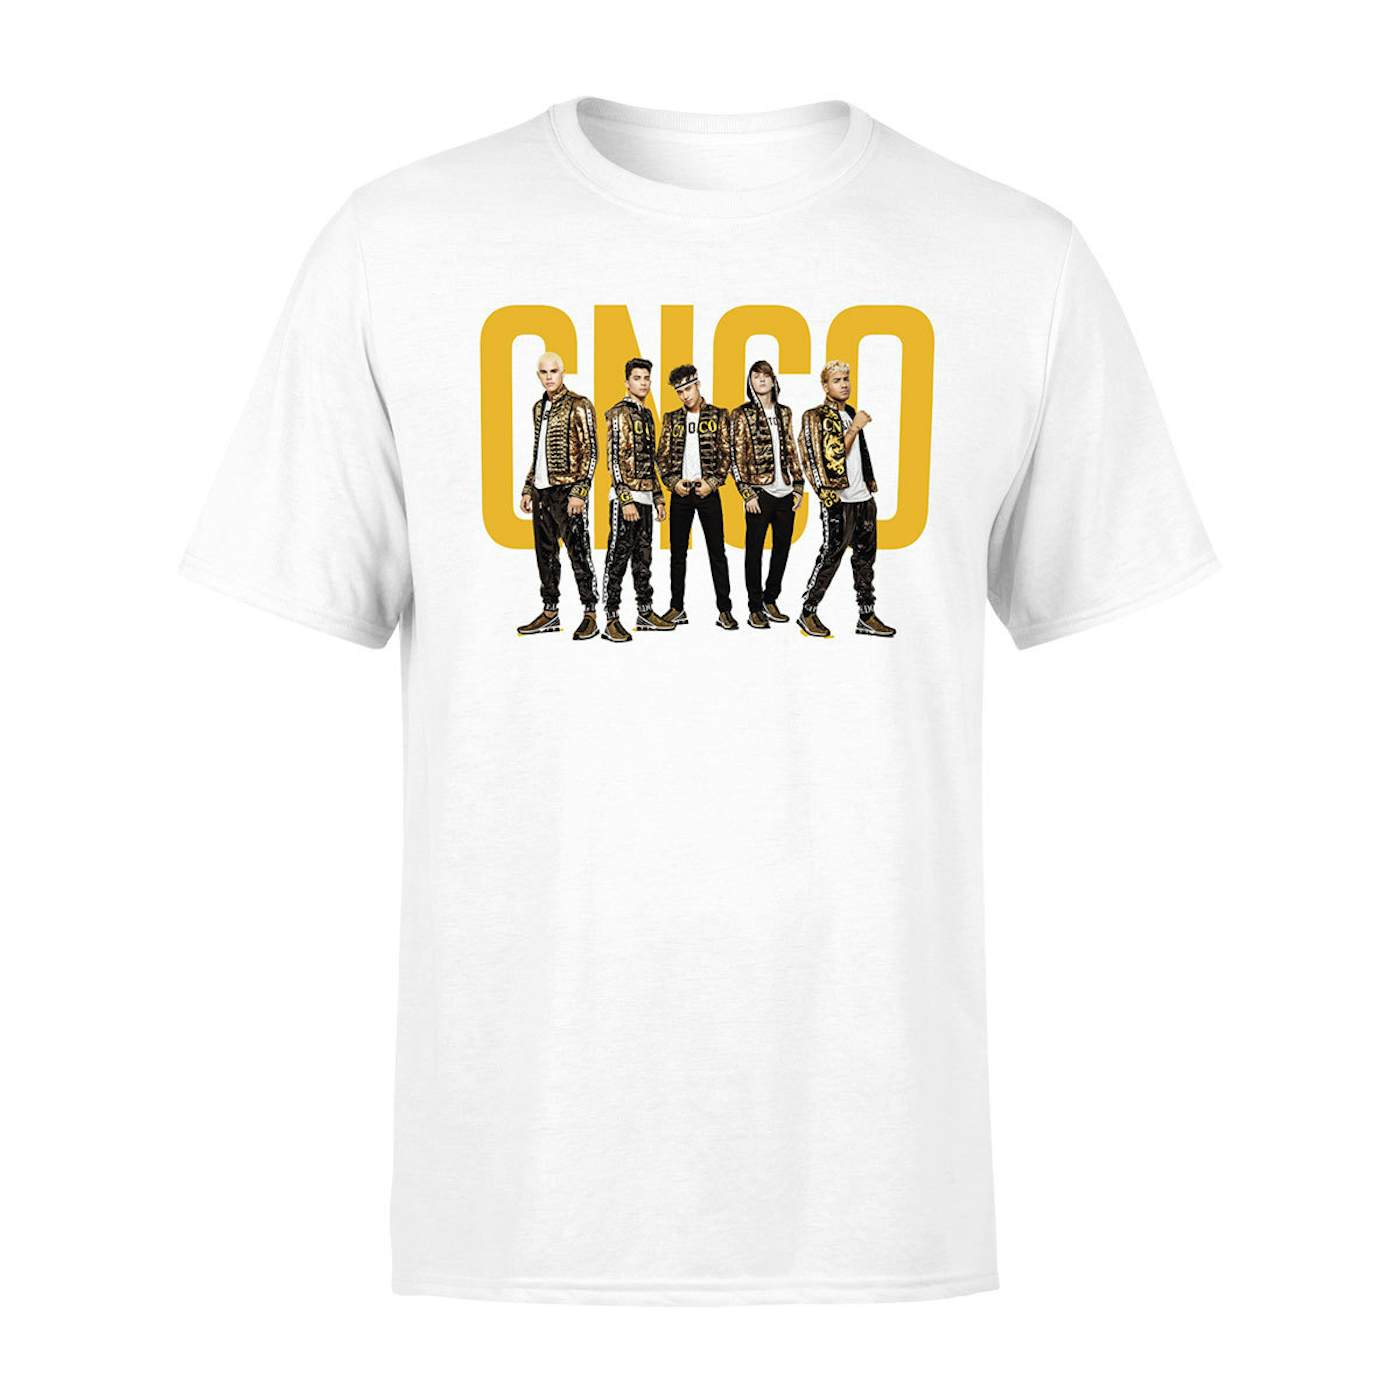 CNCO - 2019 World Tour T-shirt